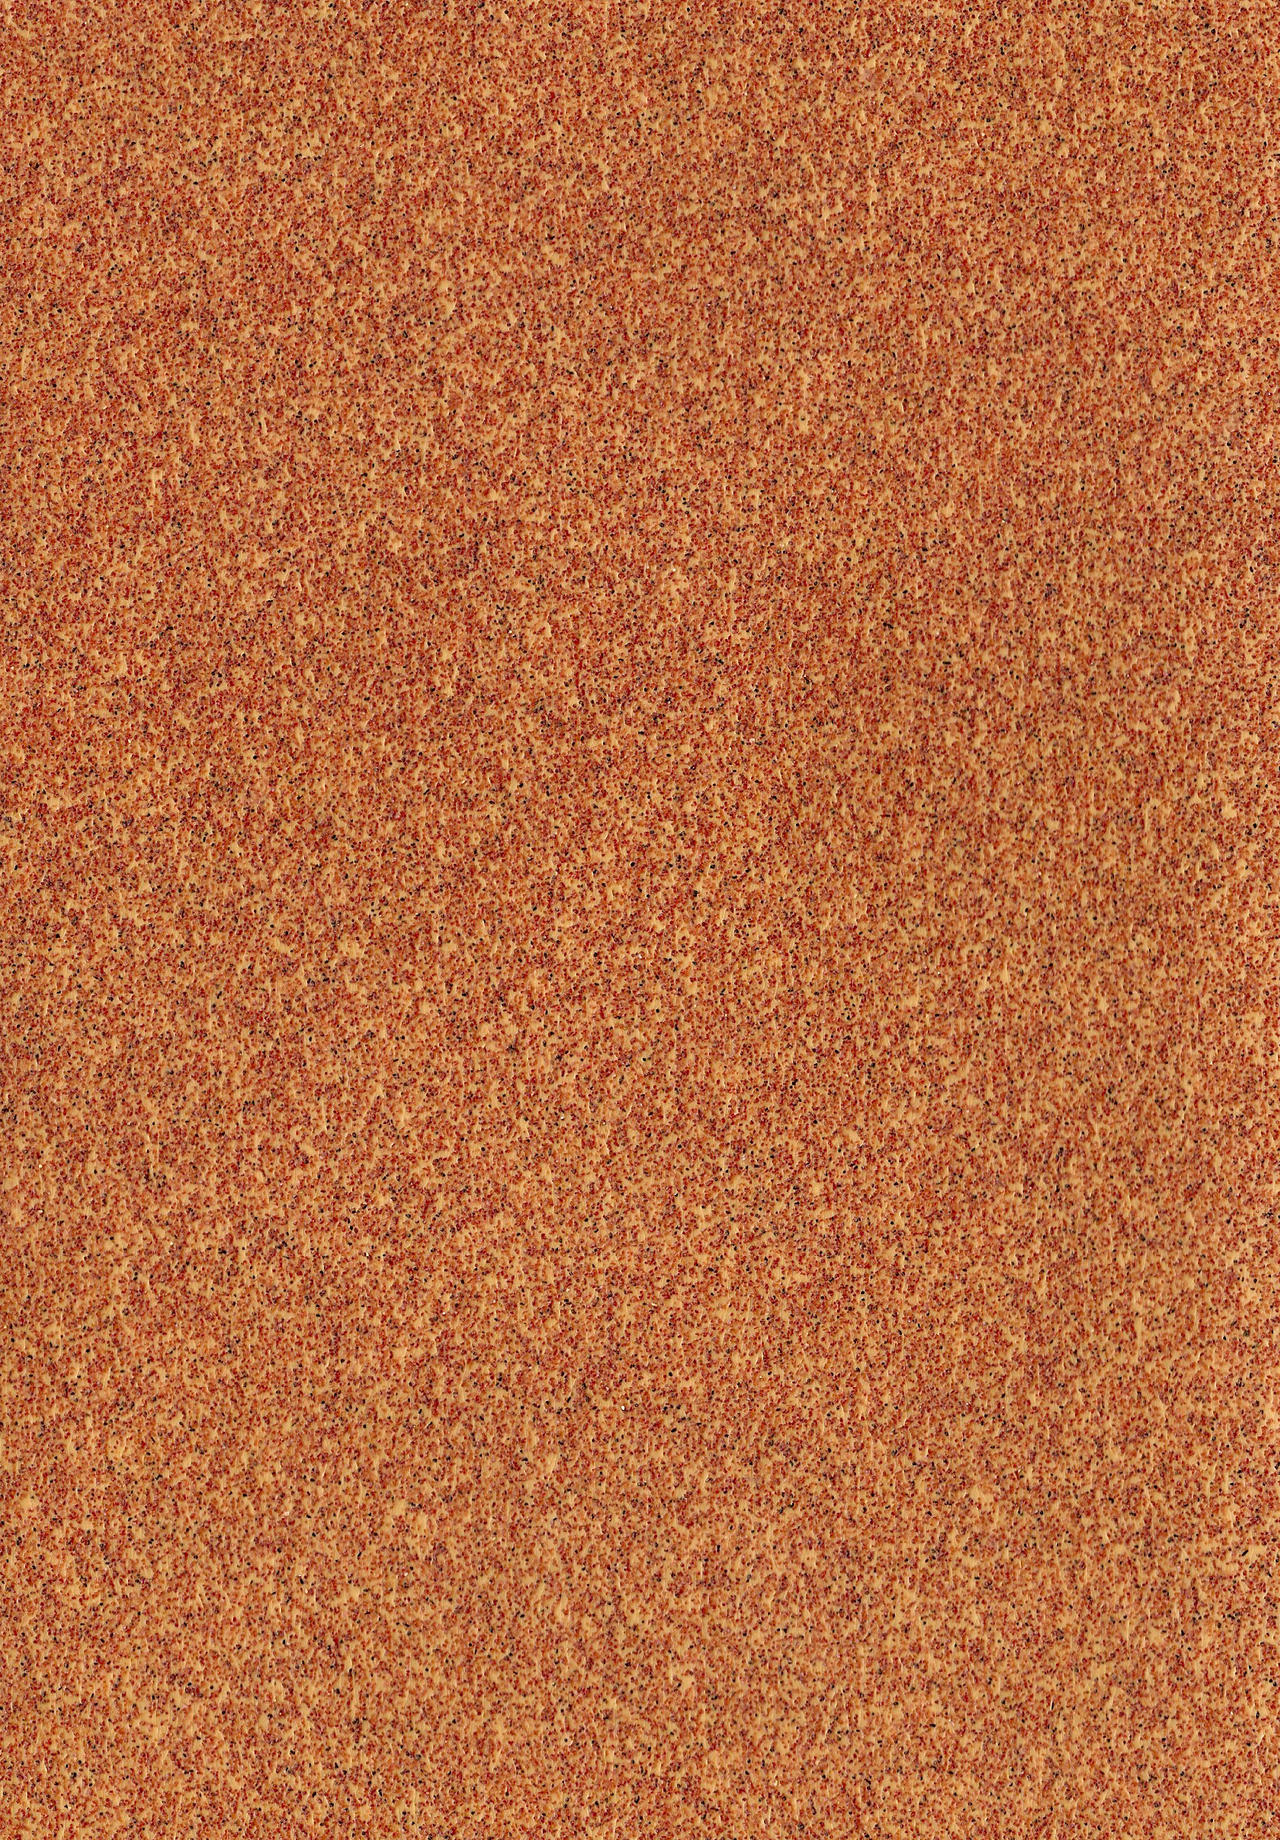 Sandpaper Sand Texture Stock